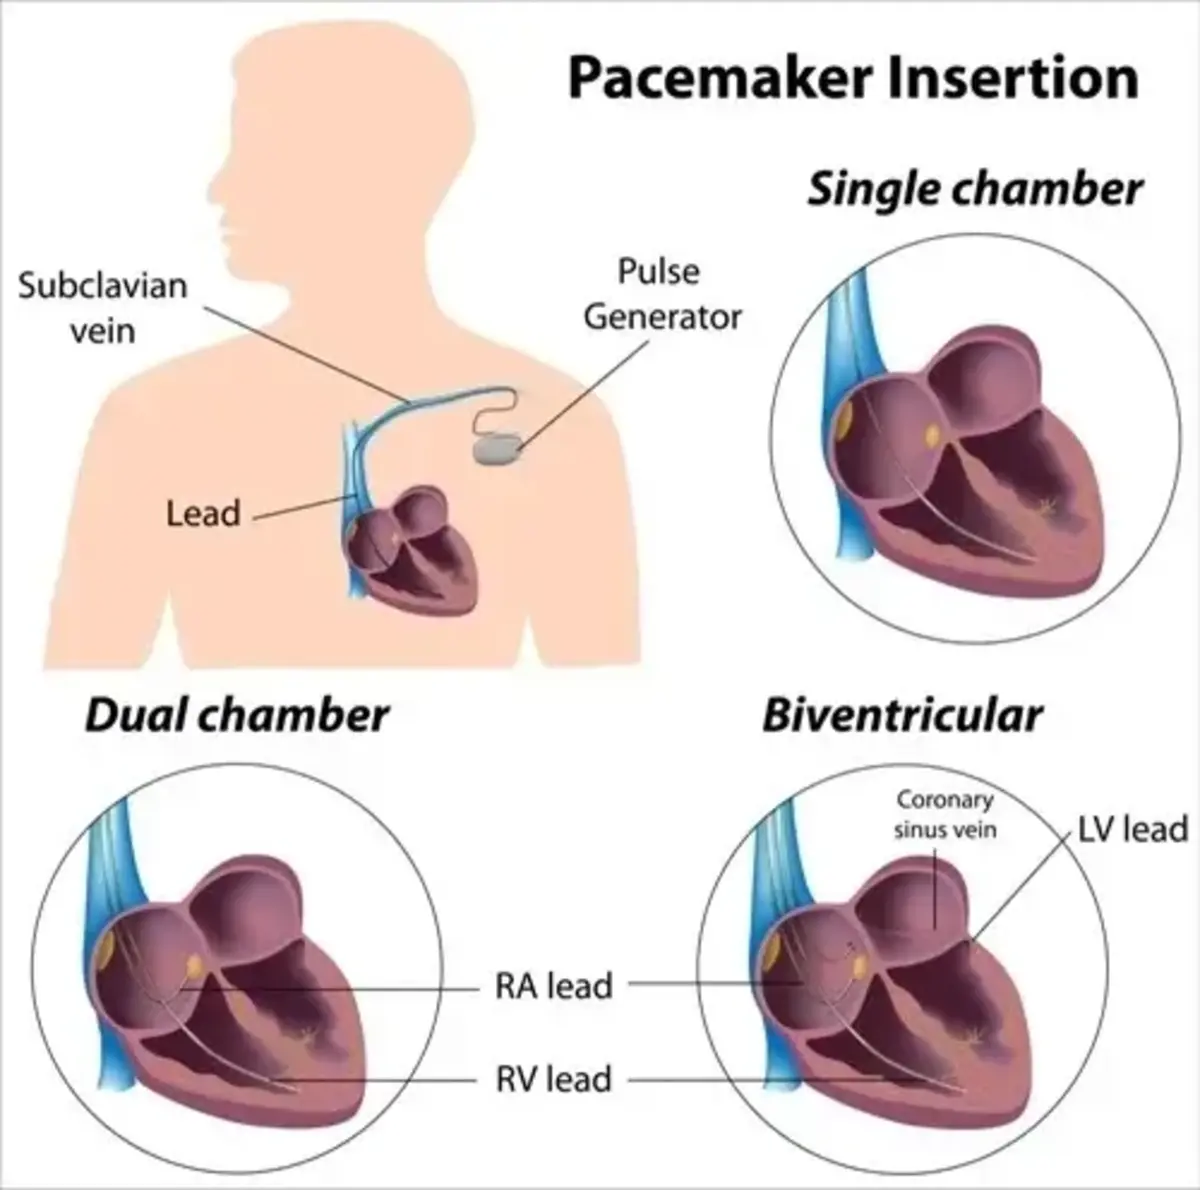 Pacemaker Insertion | https://www.harleystreet.sg/